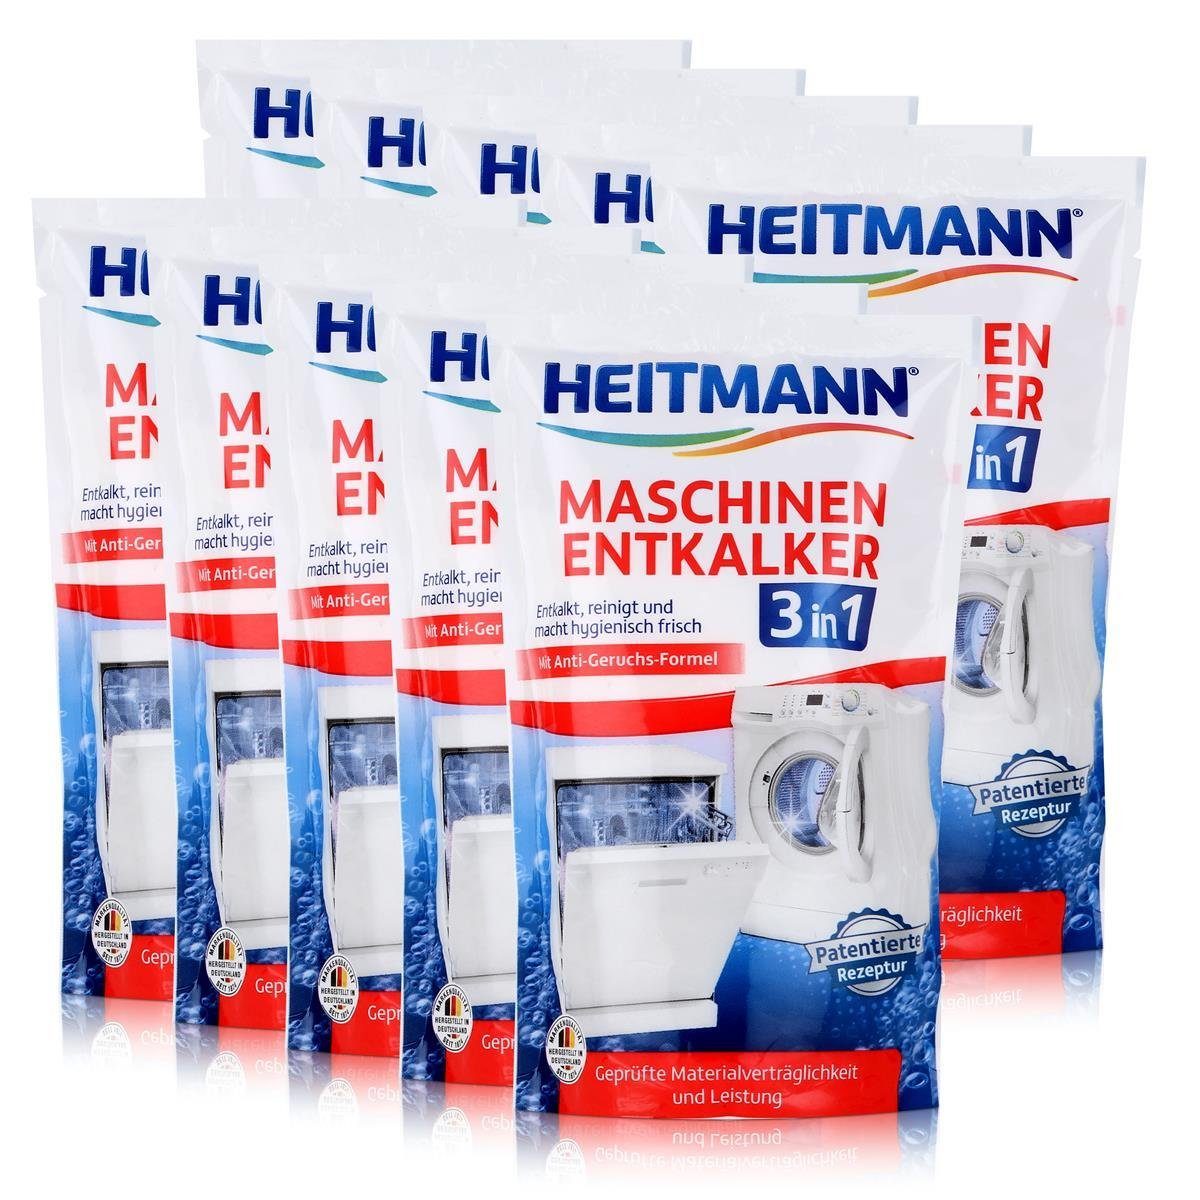 HEITMANN Heitmann Maschinen Entkalker (Spezialwaschmittel 175g und Geschirrspüler -Waschmaschinen